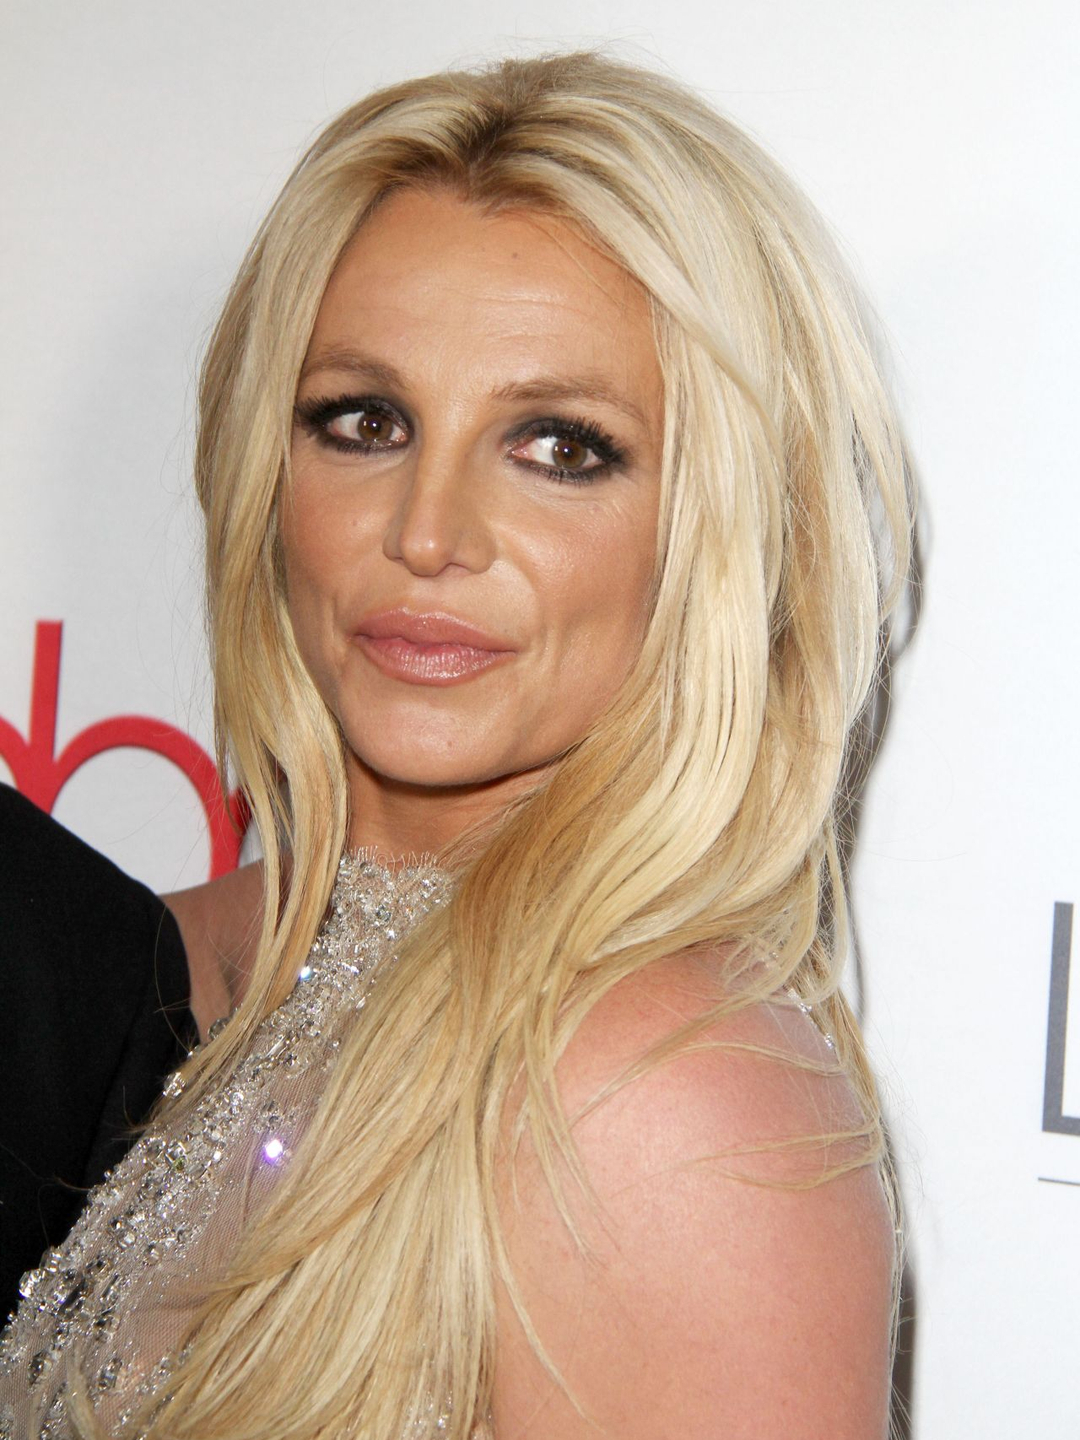 Britney Spears early career